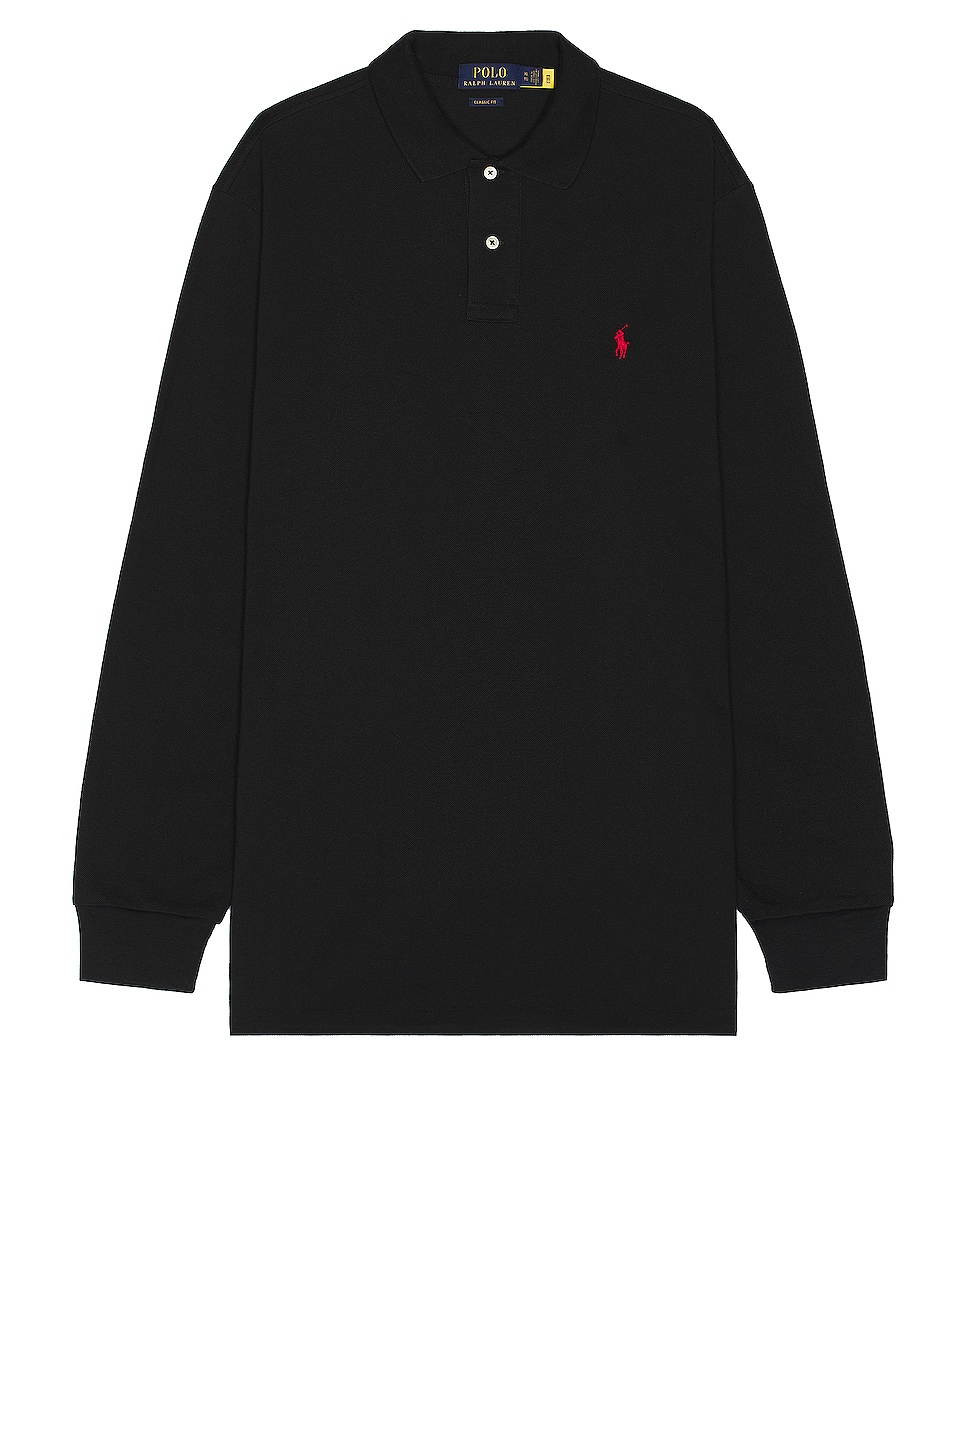 Image 1 of Polo Ralph Lauren Long Sleeve Polo in Polo Black